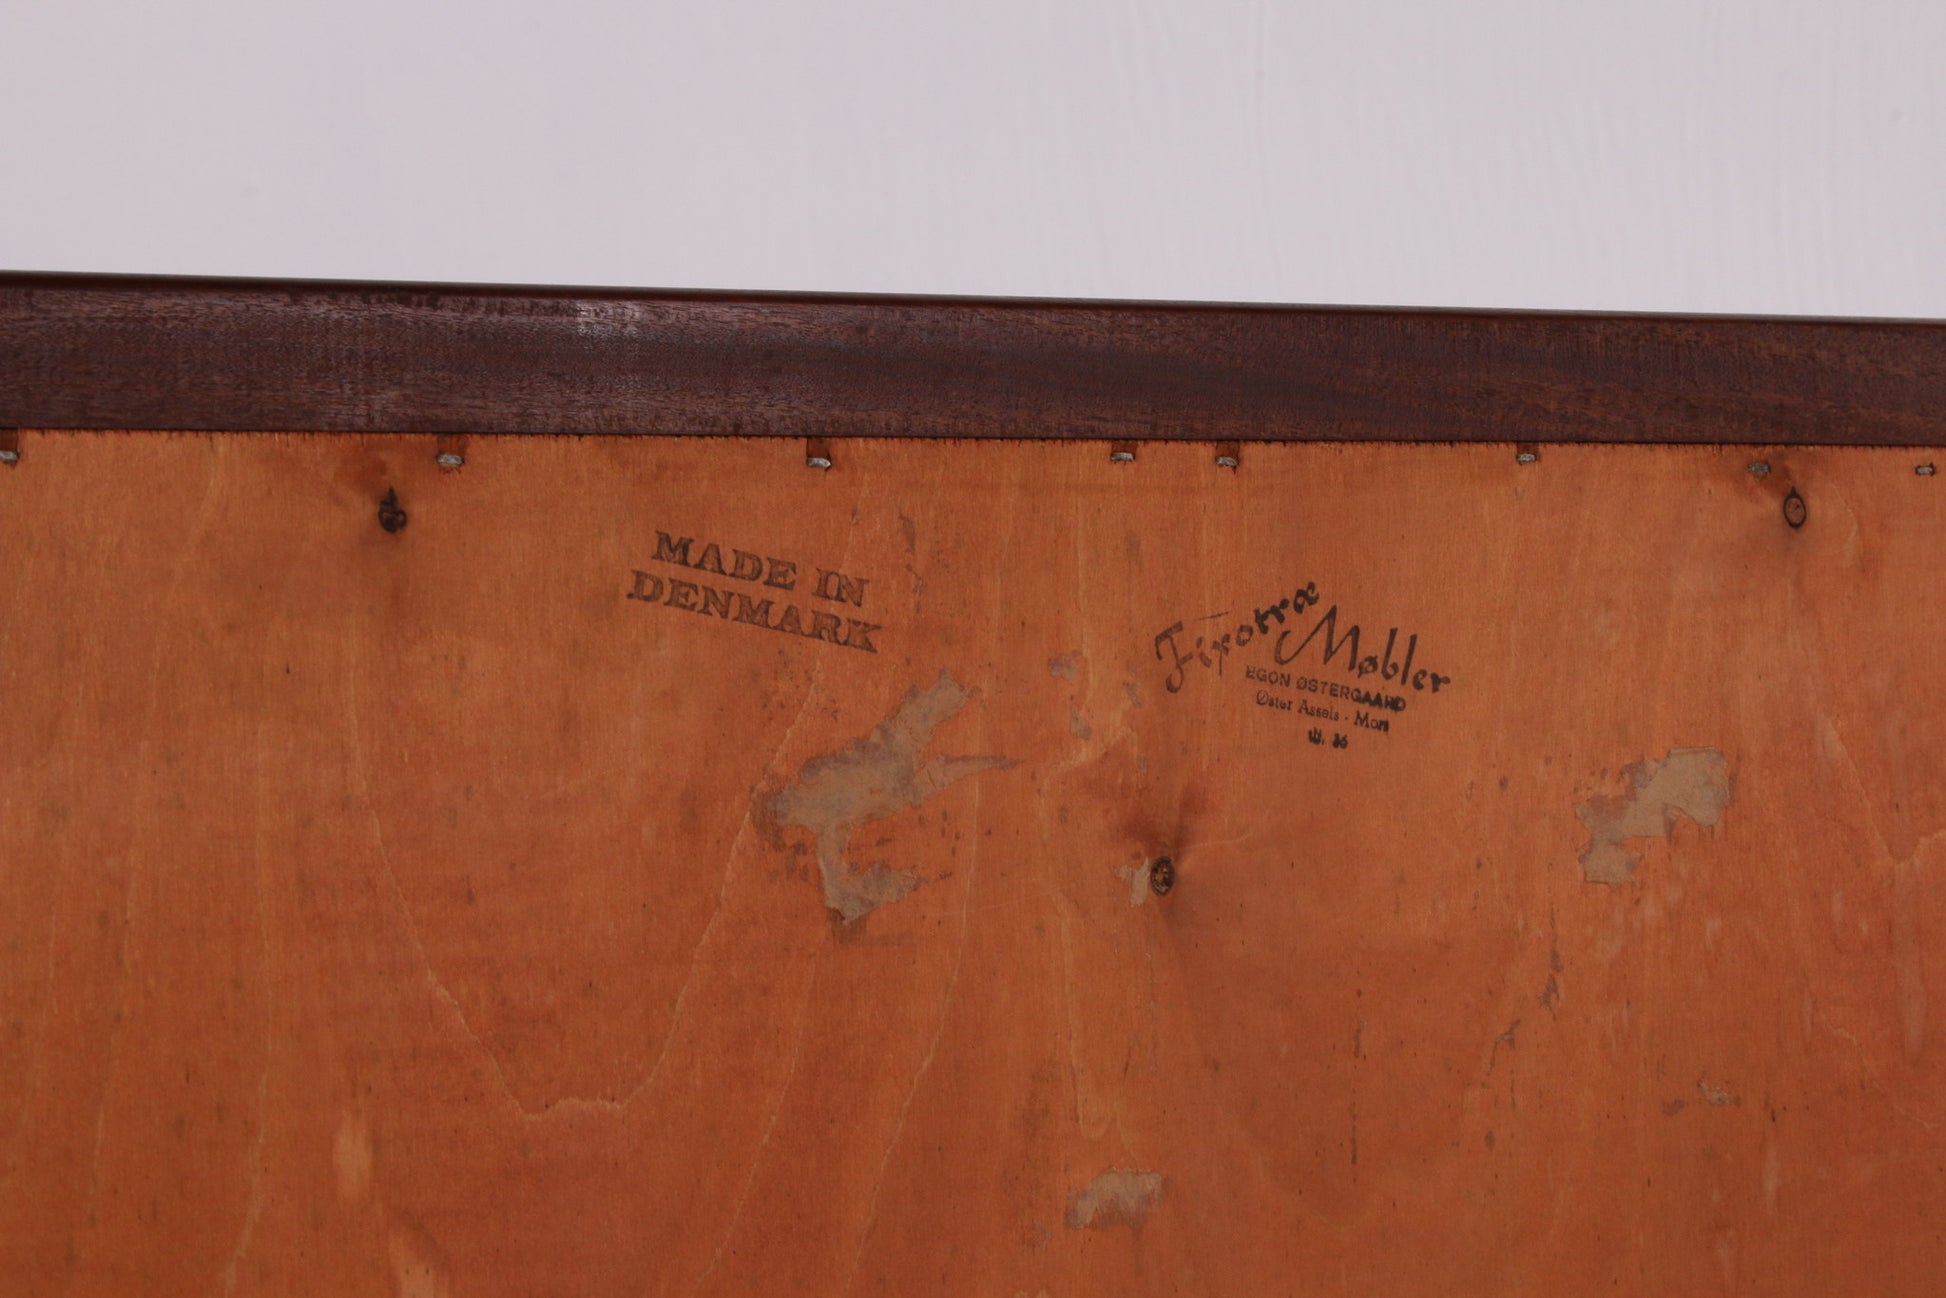 Make up tafel met ladekast van Egon Ostergaard Made in Denmark detail stempel achterkant